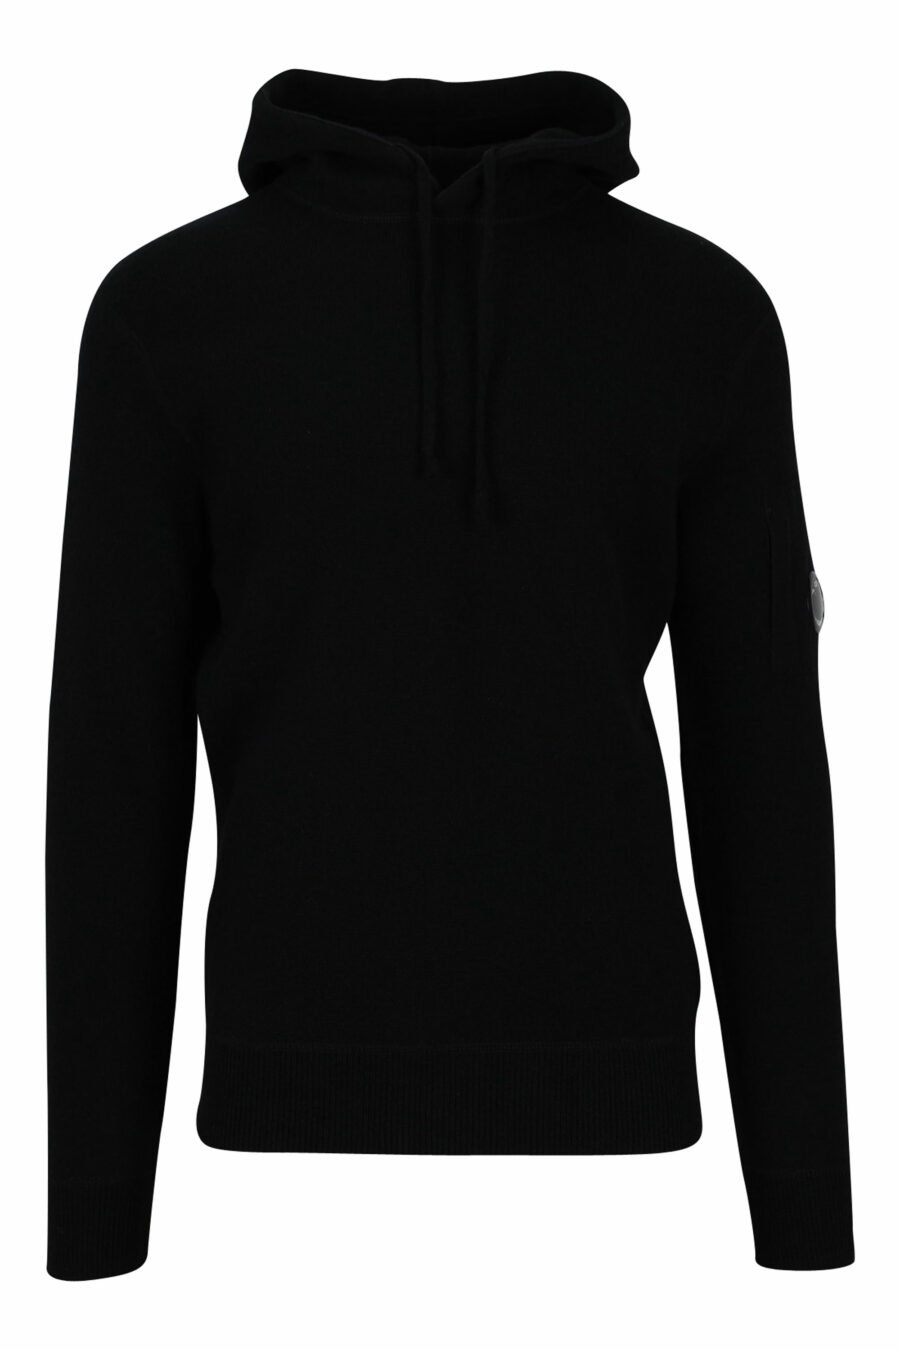 C.P. Company - Sudadera negra con capucha y logo lente lateral - BLS Fashion